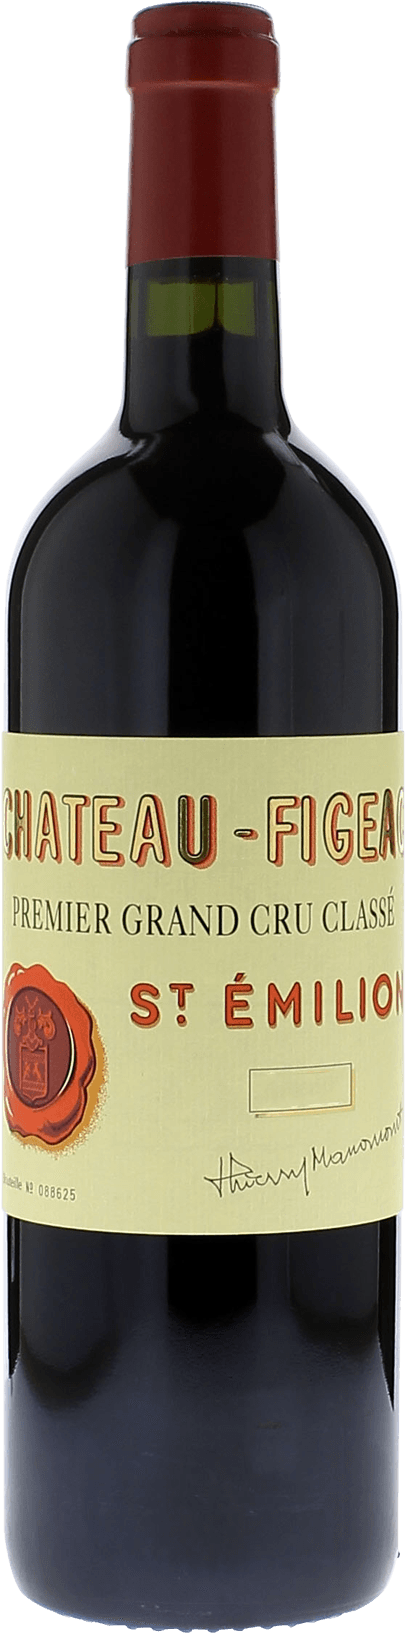 Figeac 1984 1er Grand cru B class Saint-Emilion, Bordeaux rouge